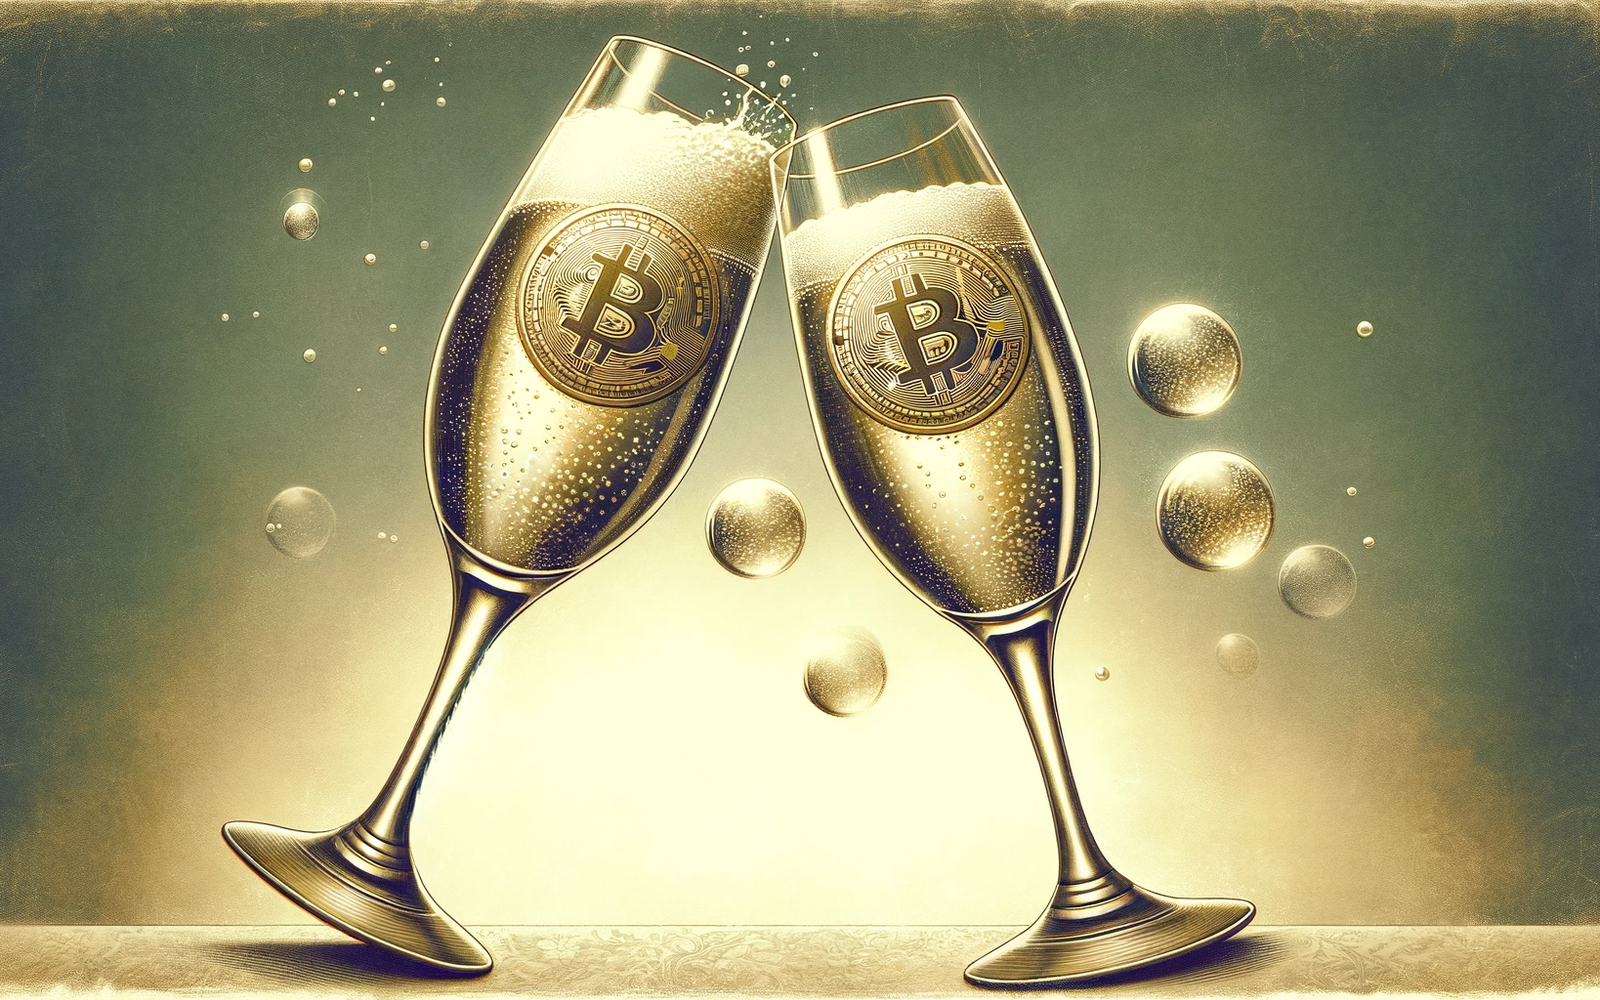 A toast to Bitcoin on January 1